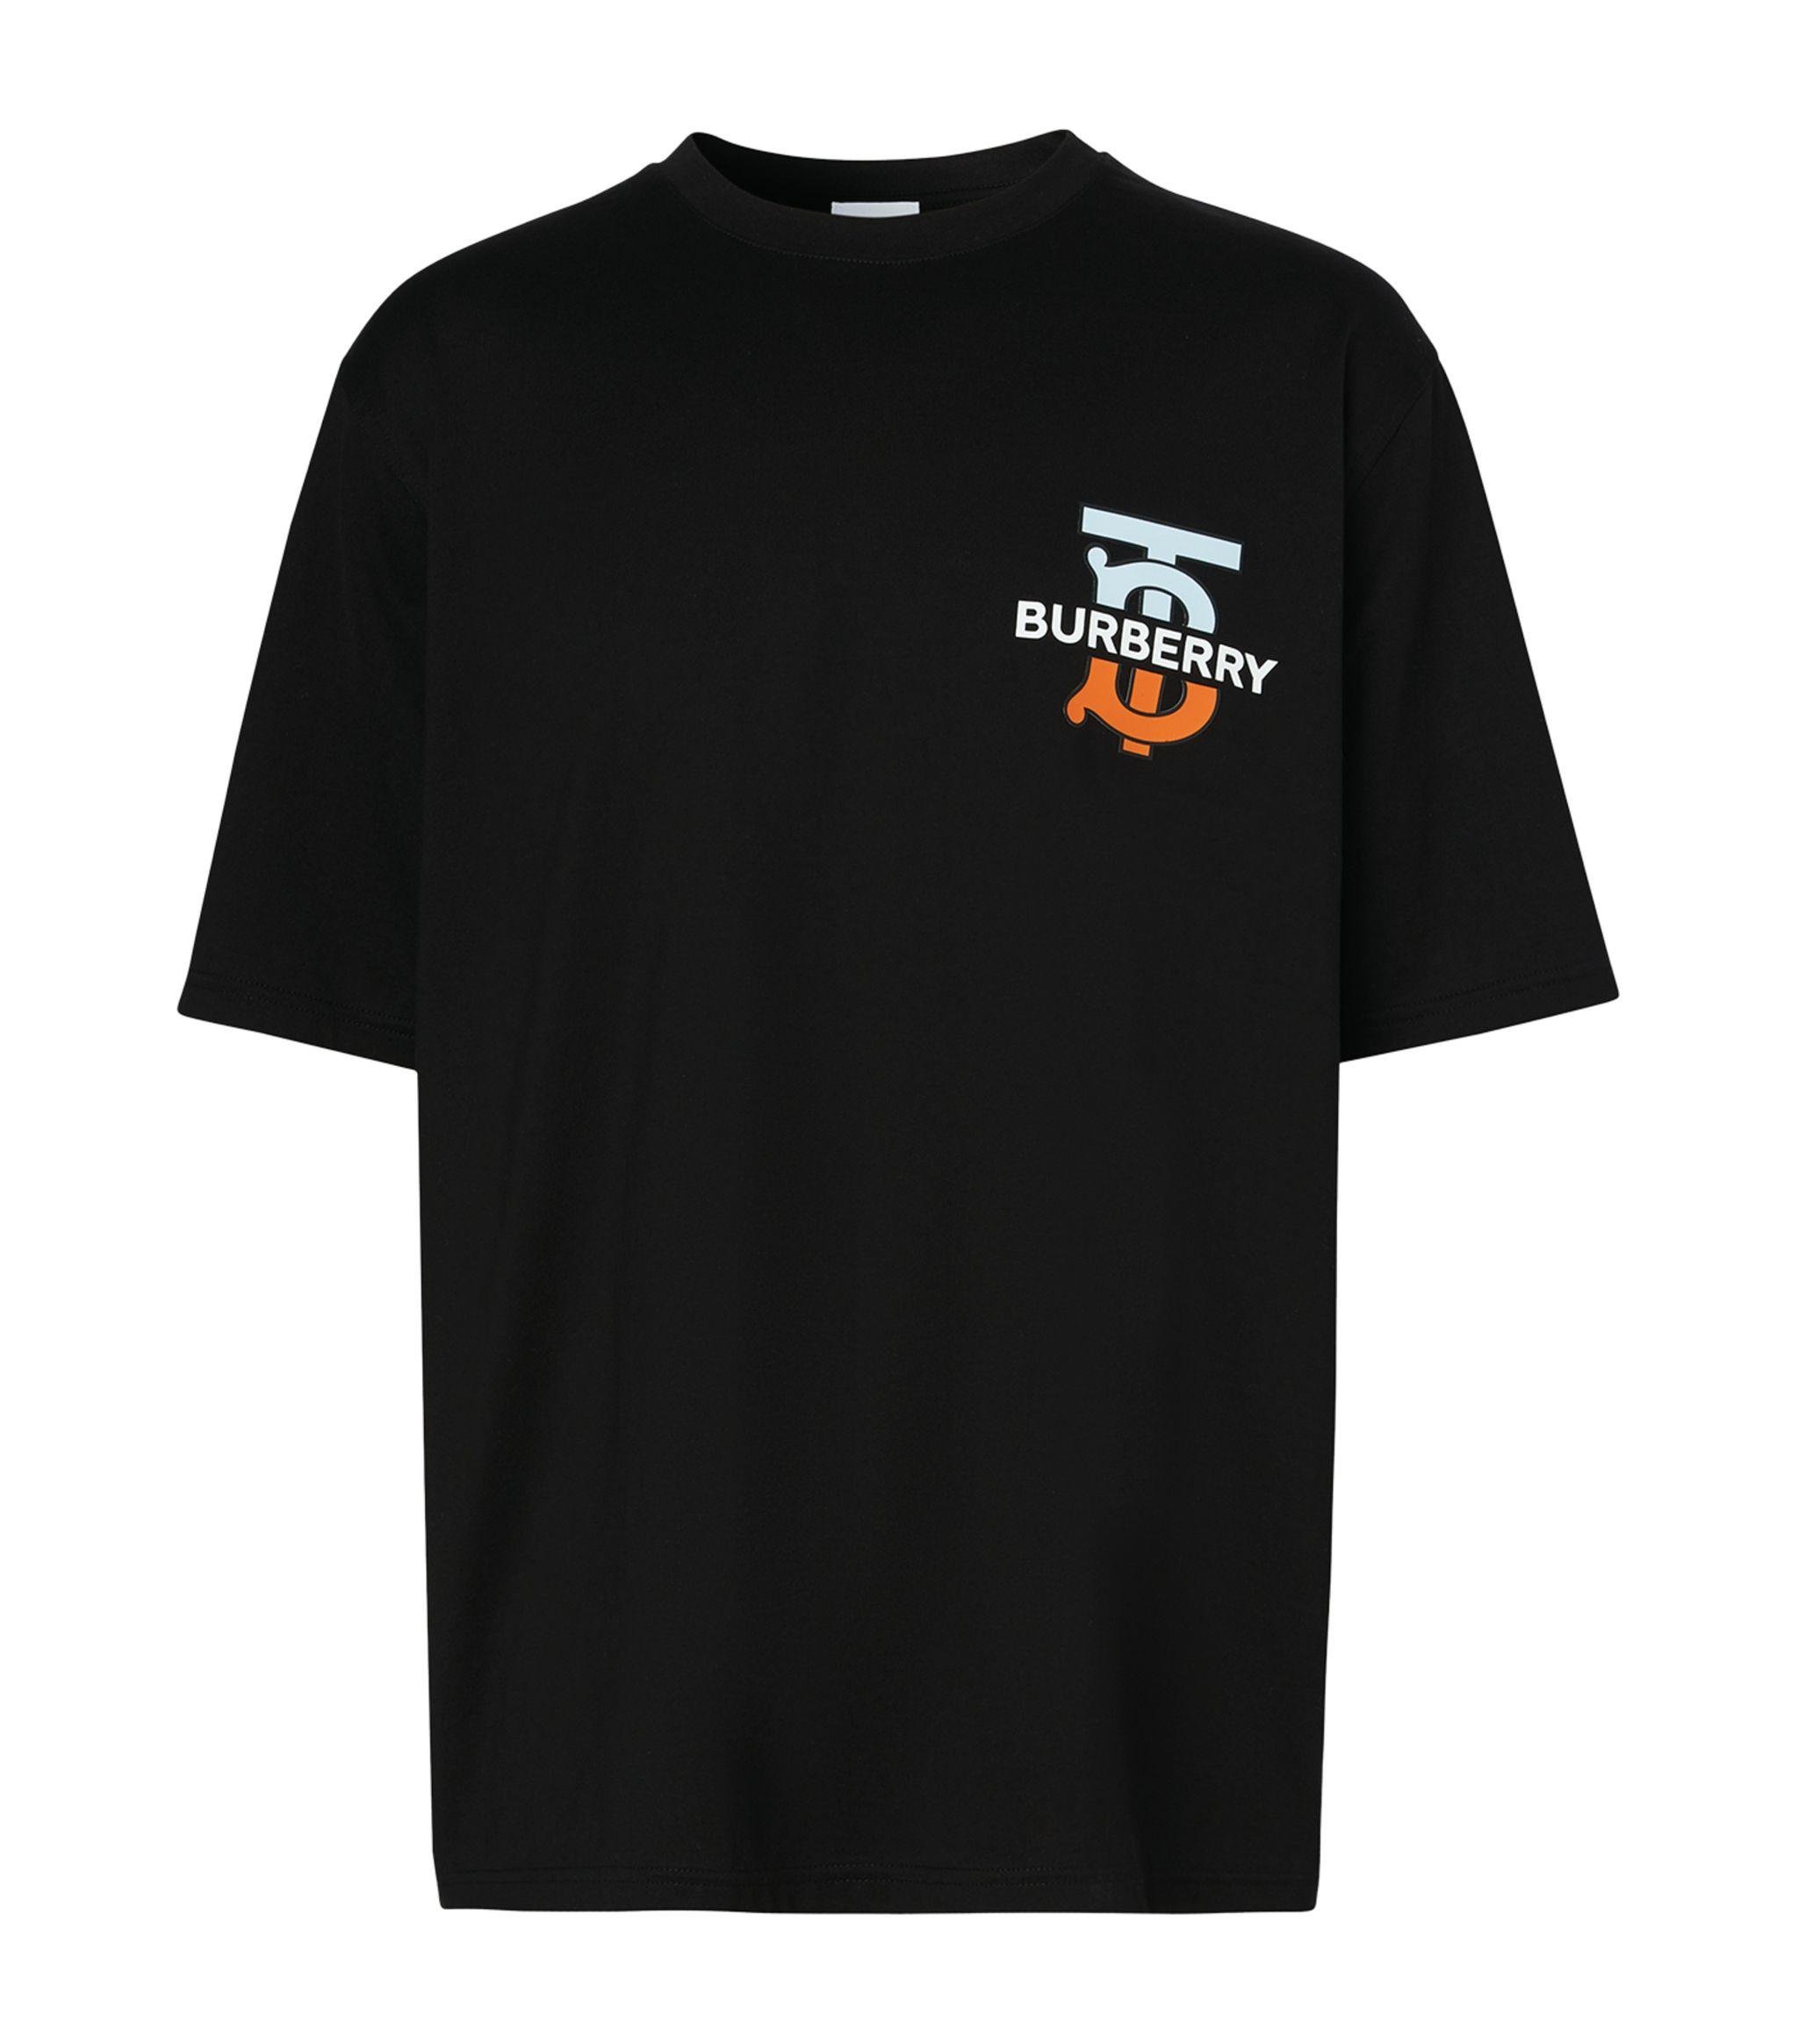 Burberry Cotton Tb Monogram Oversized T-shirt in Black for Men - Lyst